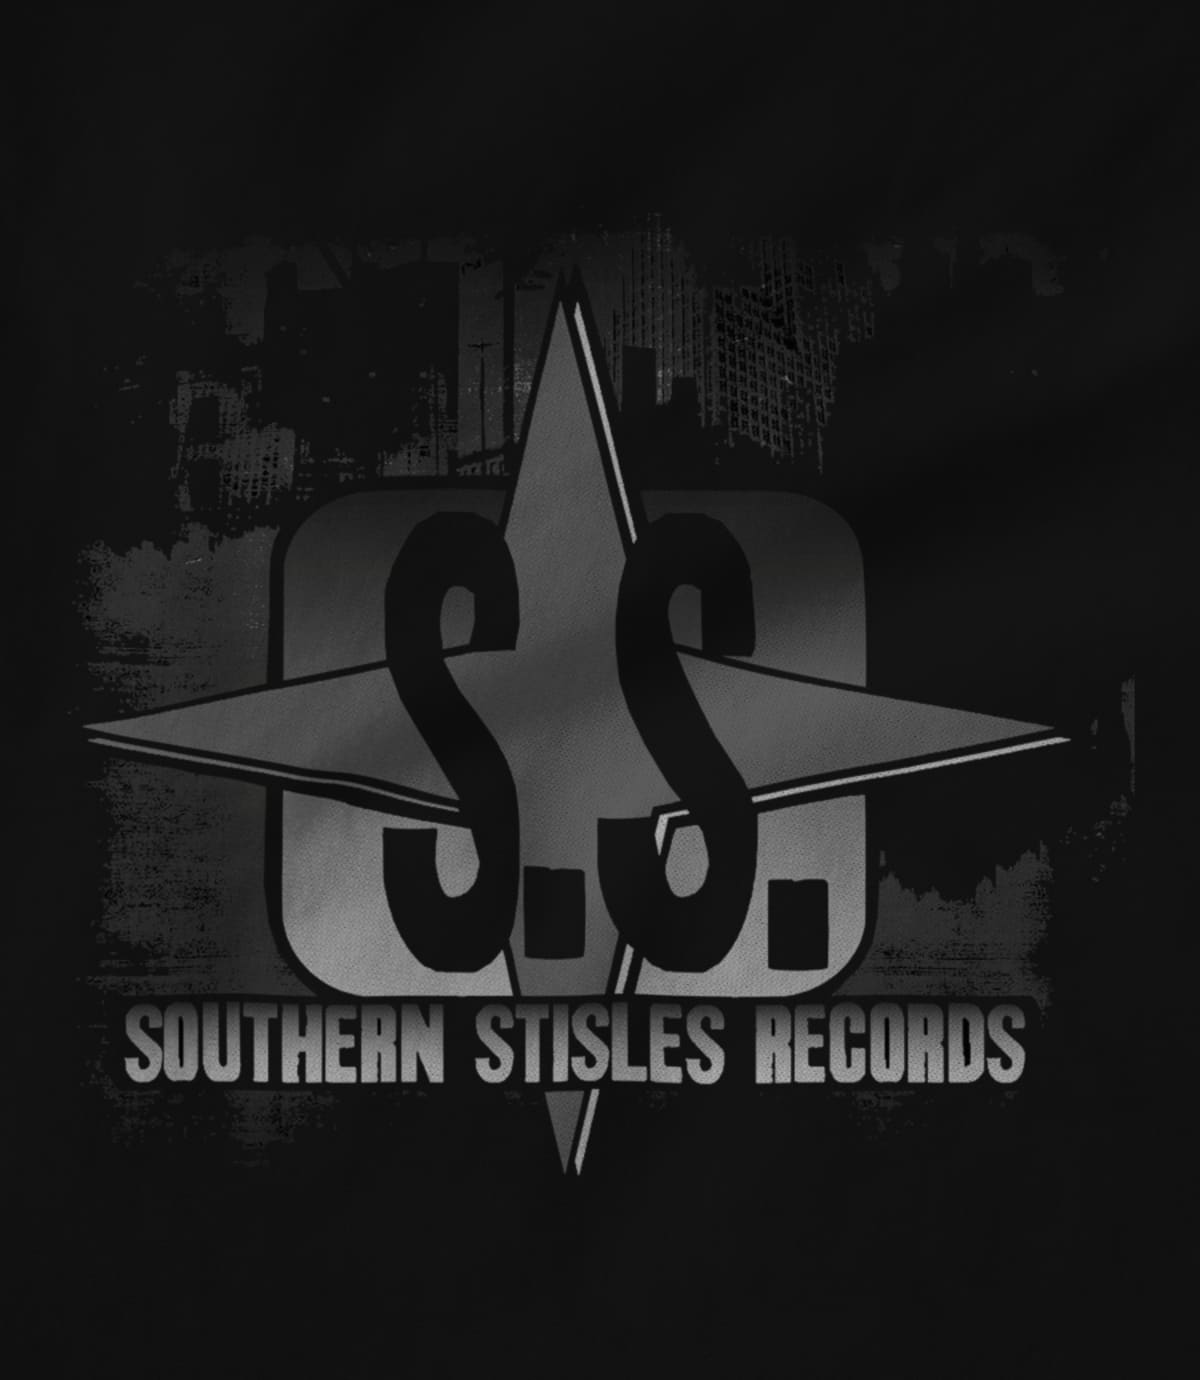 Southern Stisles Records